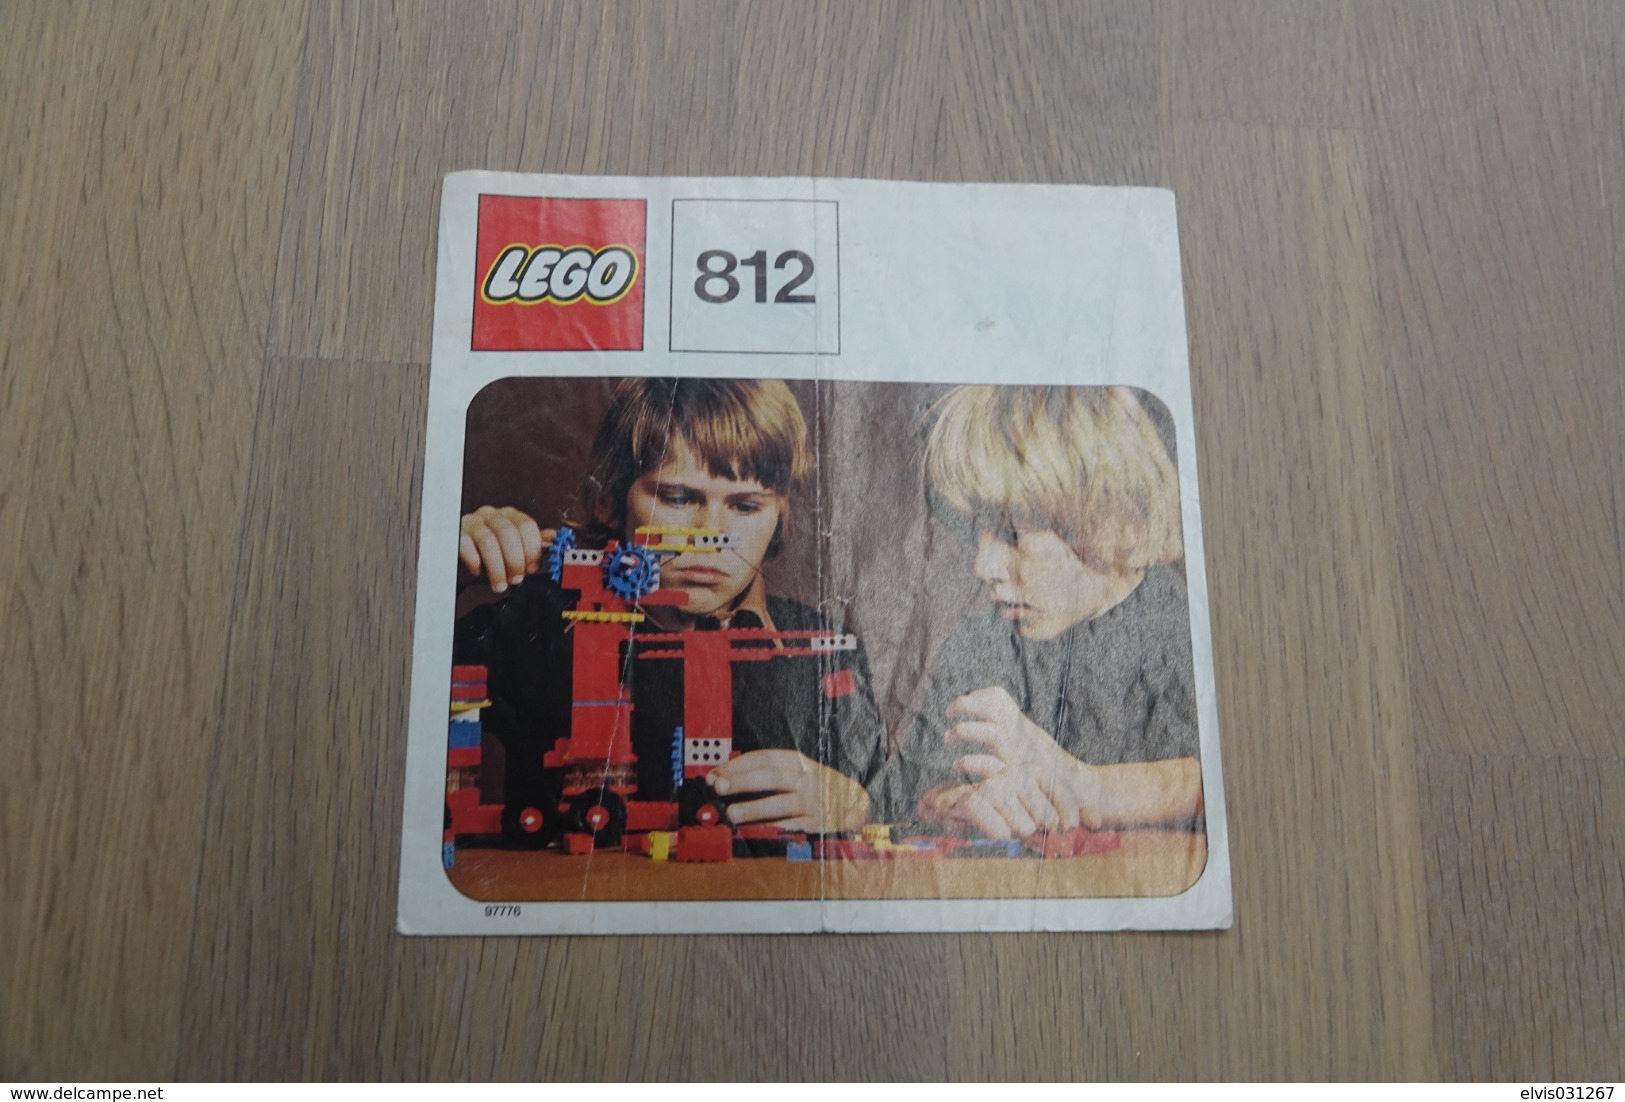 LEGO - 812 INSTRUCTION MANUAL - Original Lego 1974 - Vintage - Catalogs